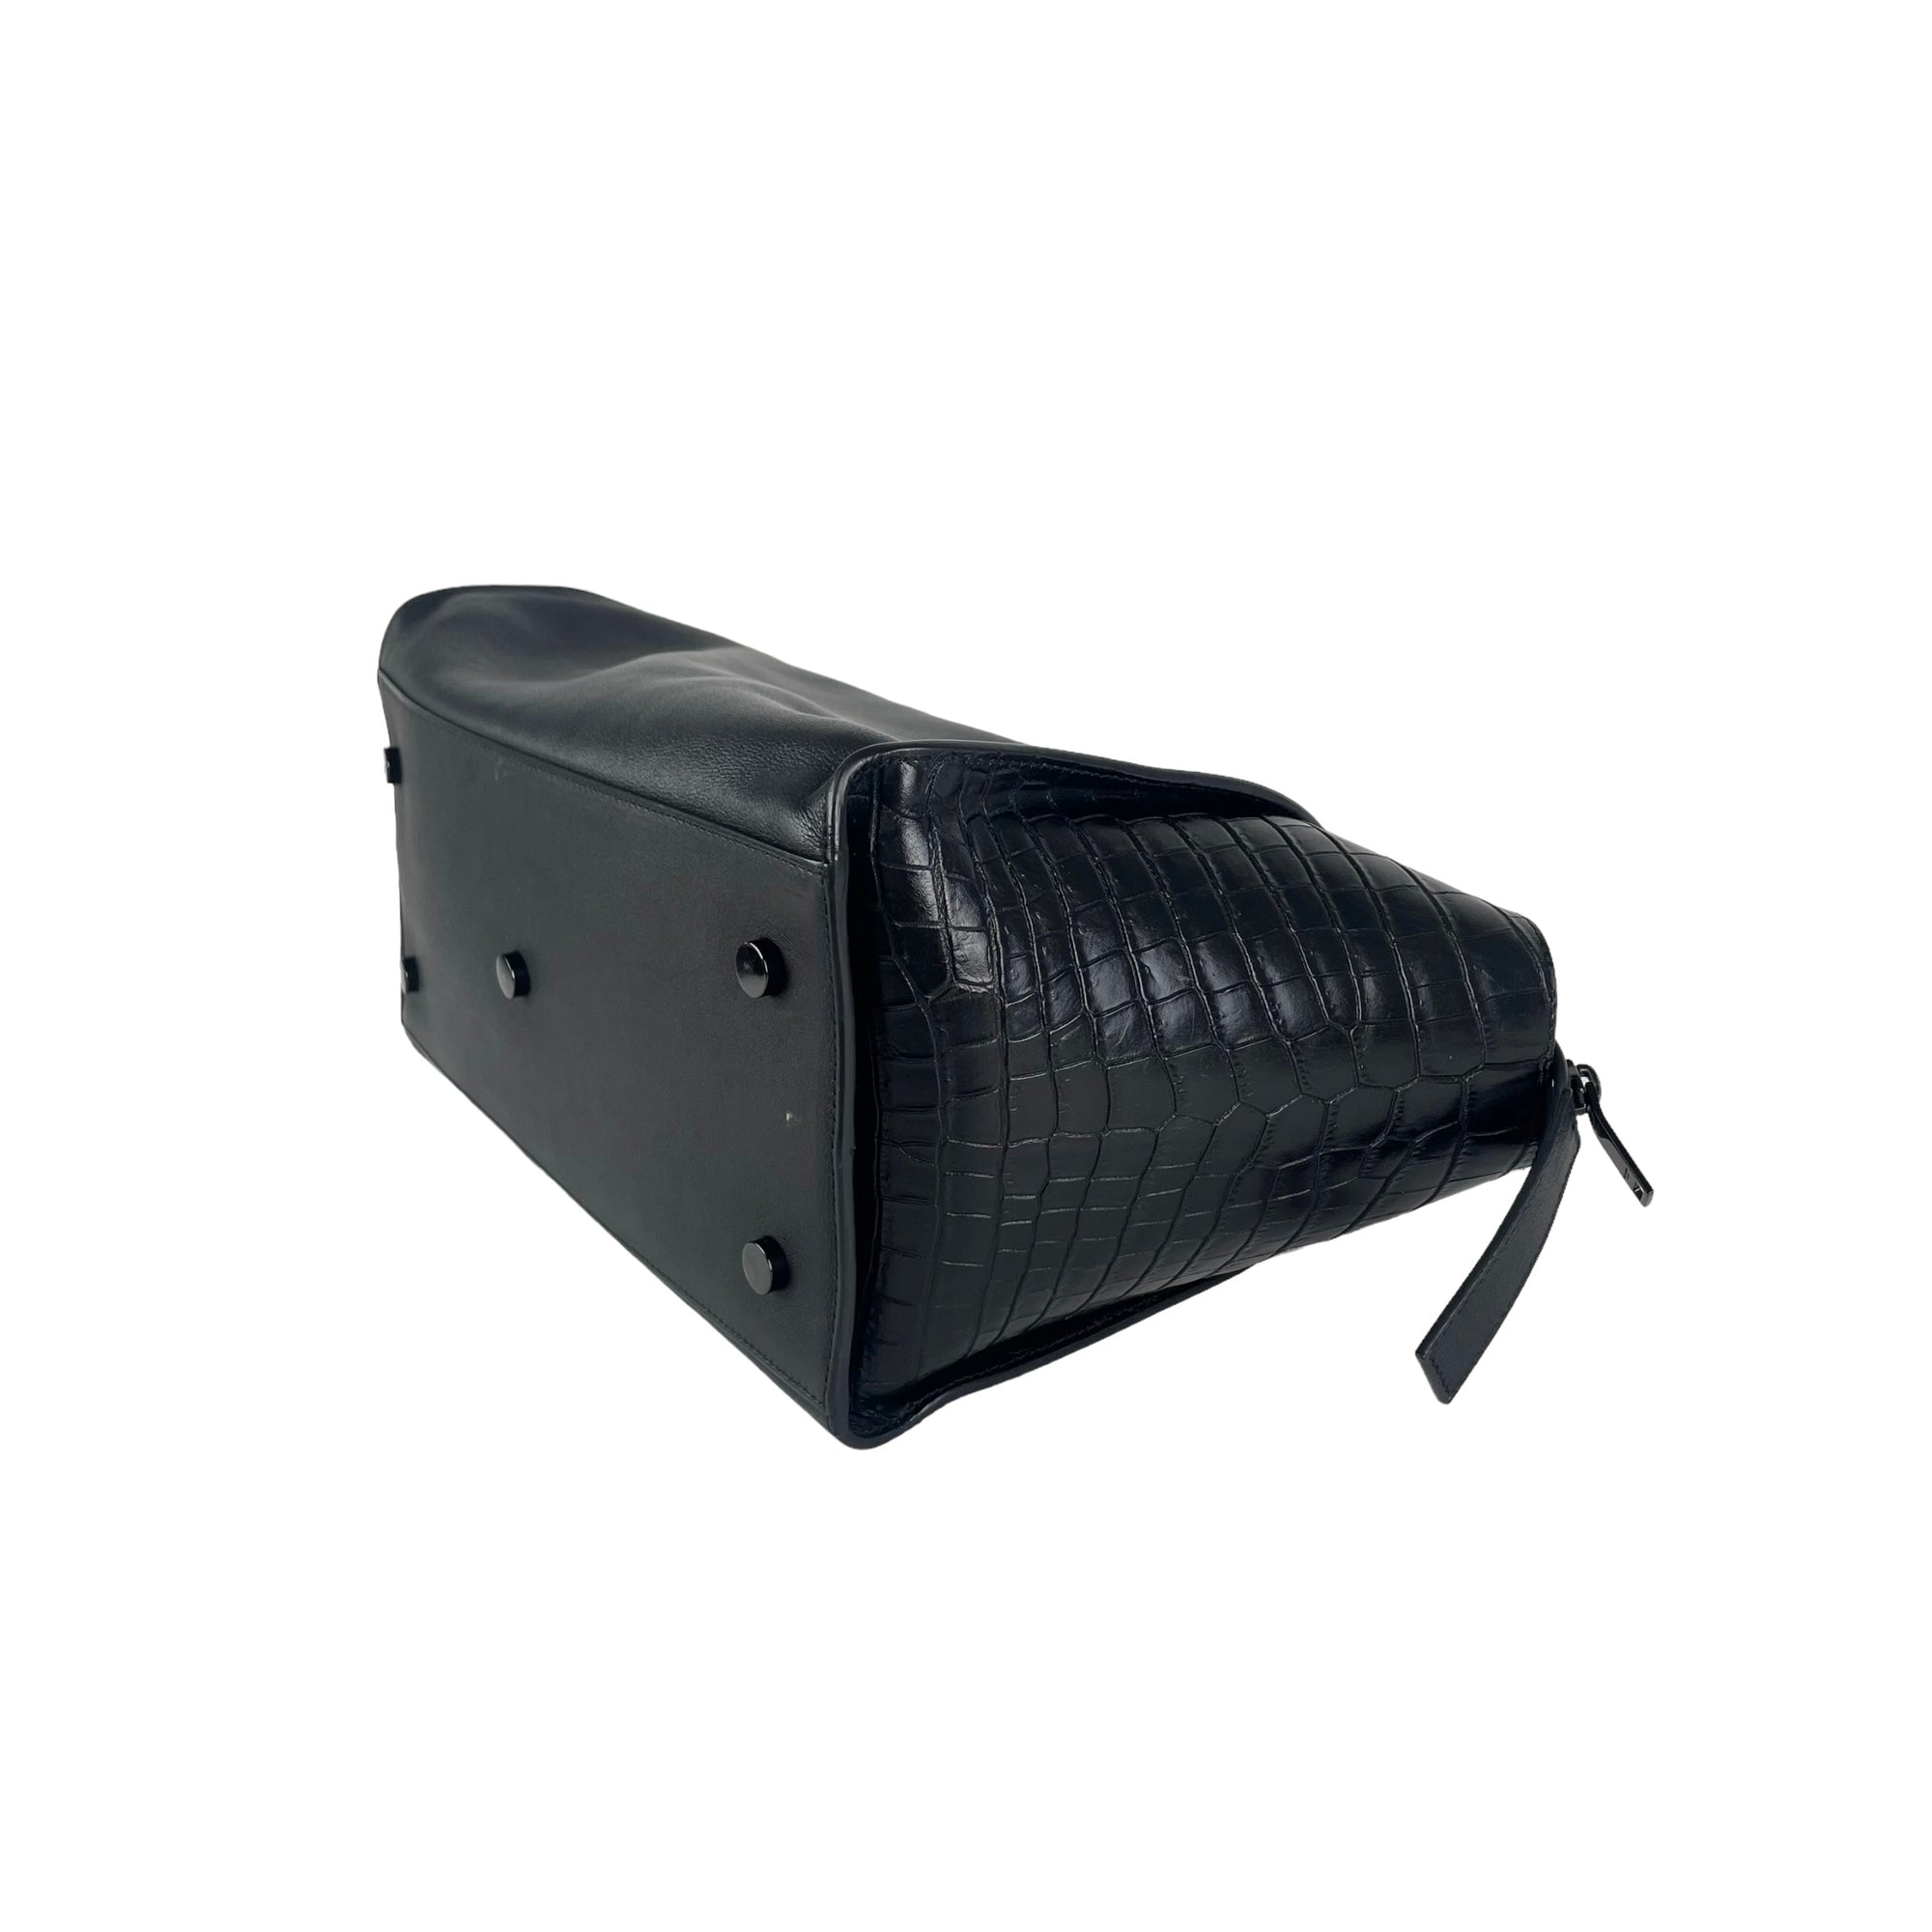 Auth SAINT LAURENT Baby Cabas Handbag Shoulder Bag Black Leather - e54549f